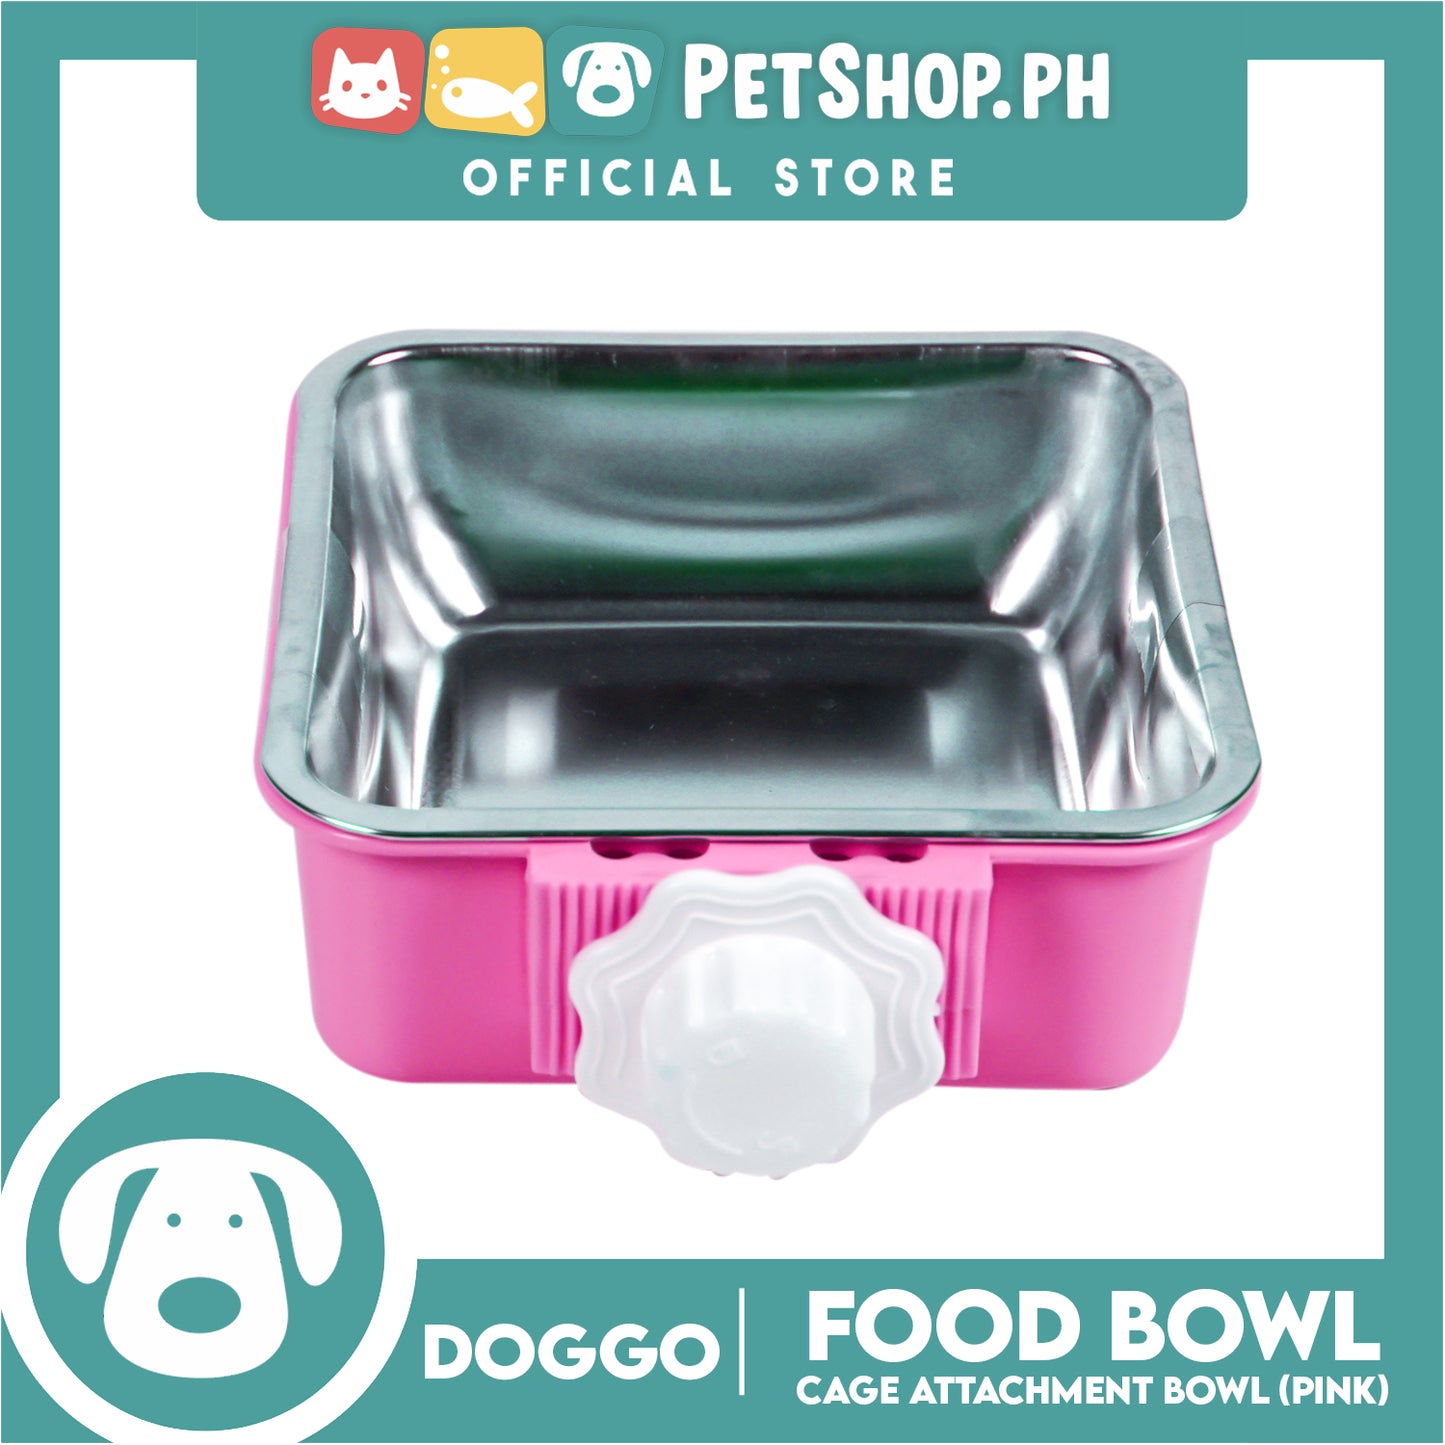 Doggo Quad Cage Attachment Bowl (Pink) Thick Plastic Material Pet Feeding Bowl